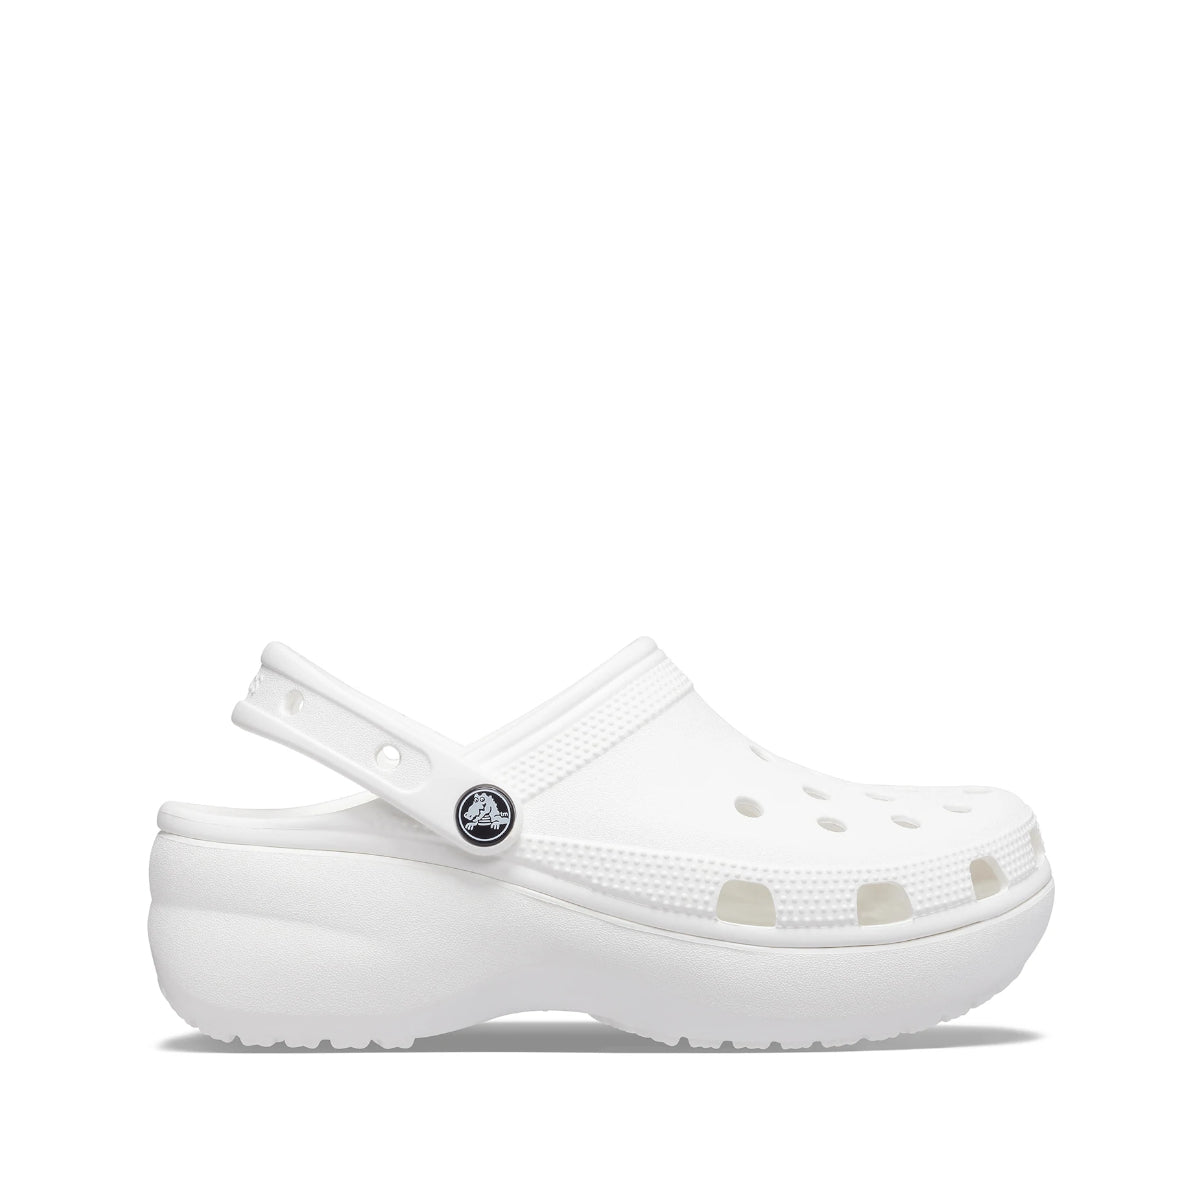 Classic Platform Clog W - shoe&me - Crocs - Crocs - Clogs, Womens